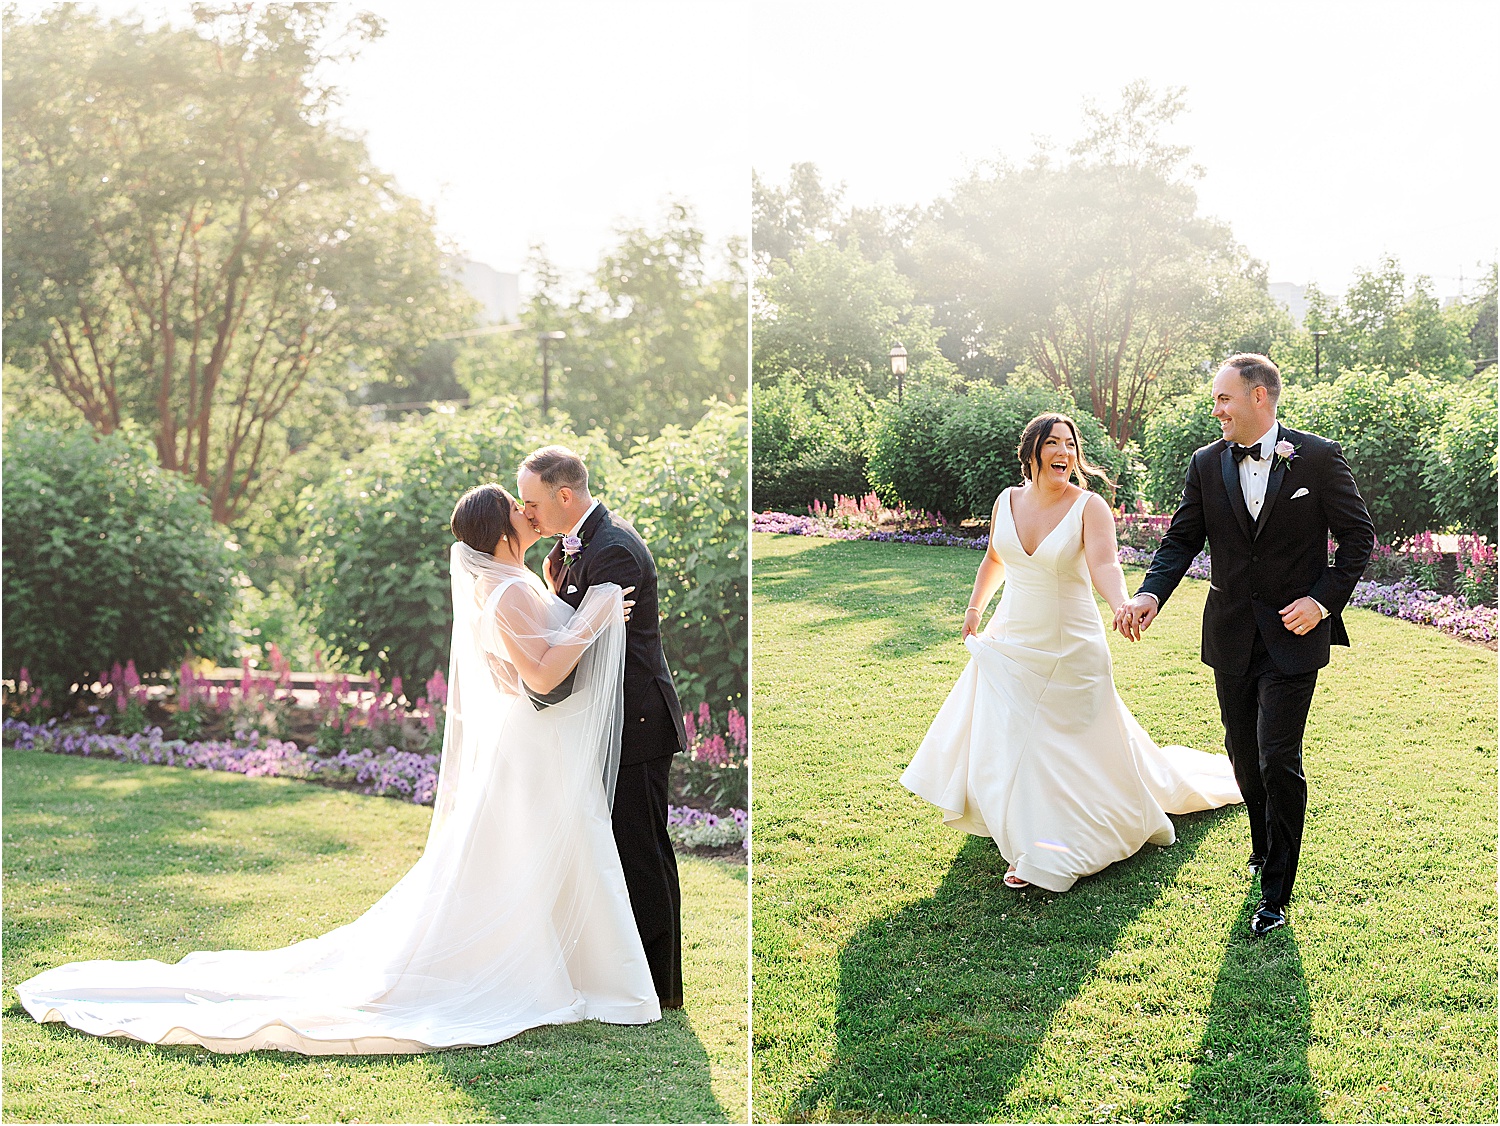 Wedding photos at phipps conservatory • Wild Weather - Love at a Phipps Conservatory Outdoor Garden Wedding